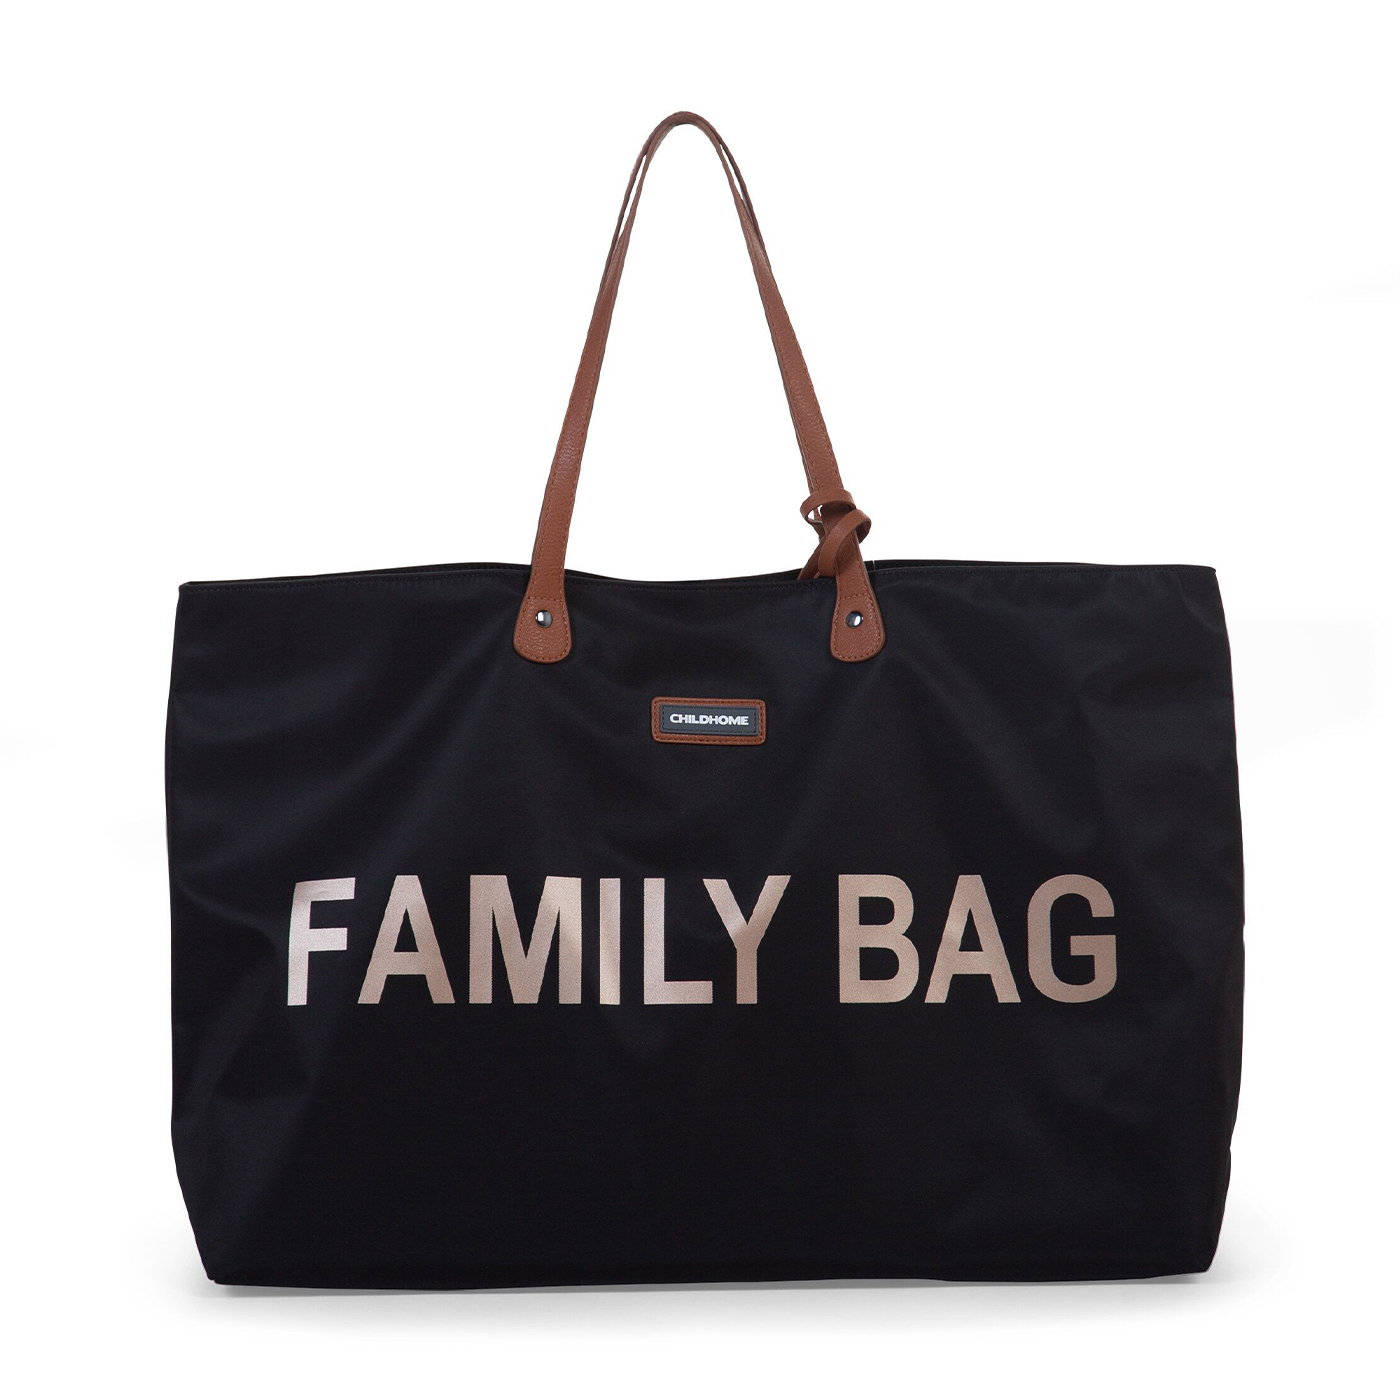  Childhome Family Bag Anne Bebek Çantası | Siyah & Gold